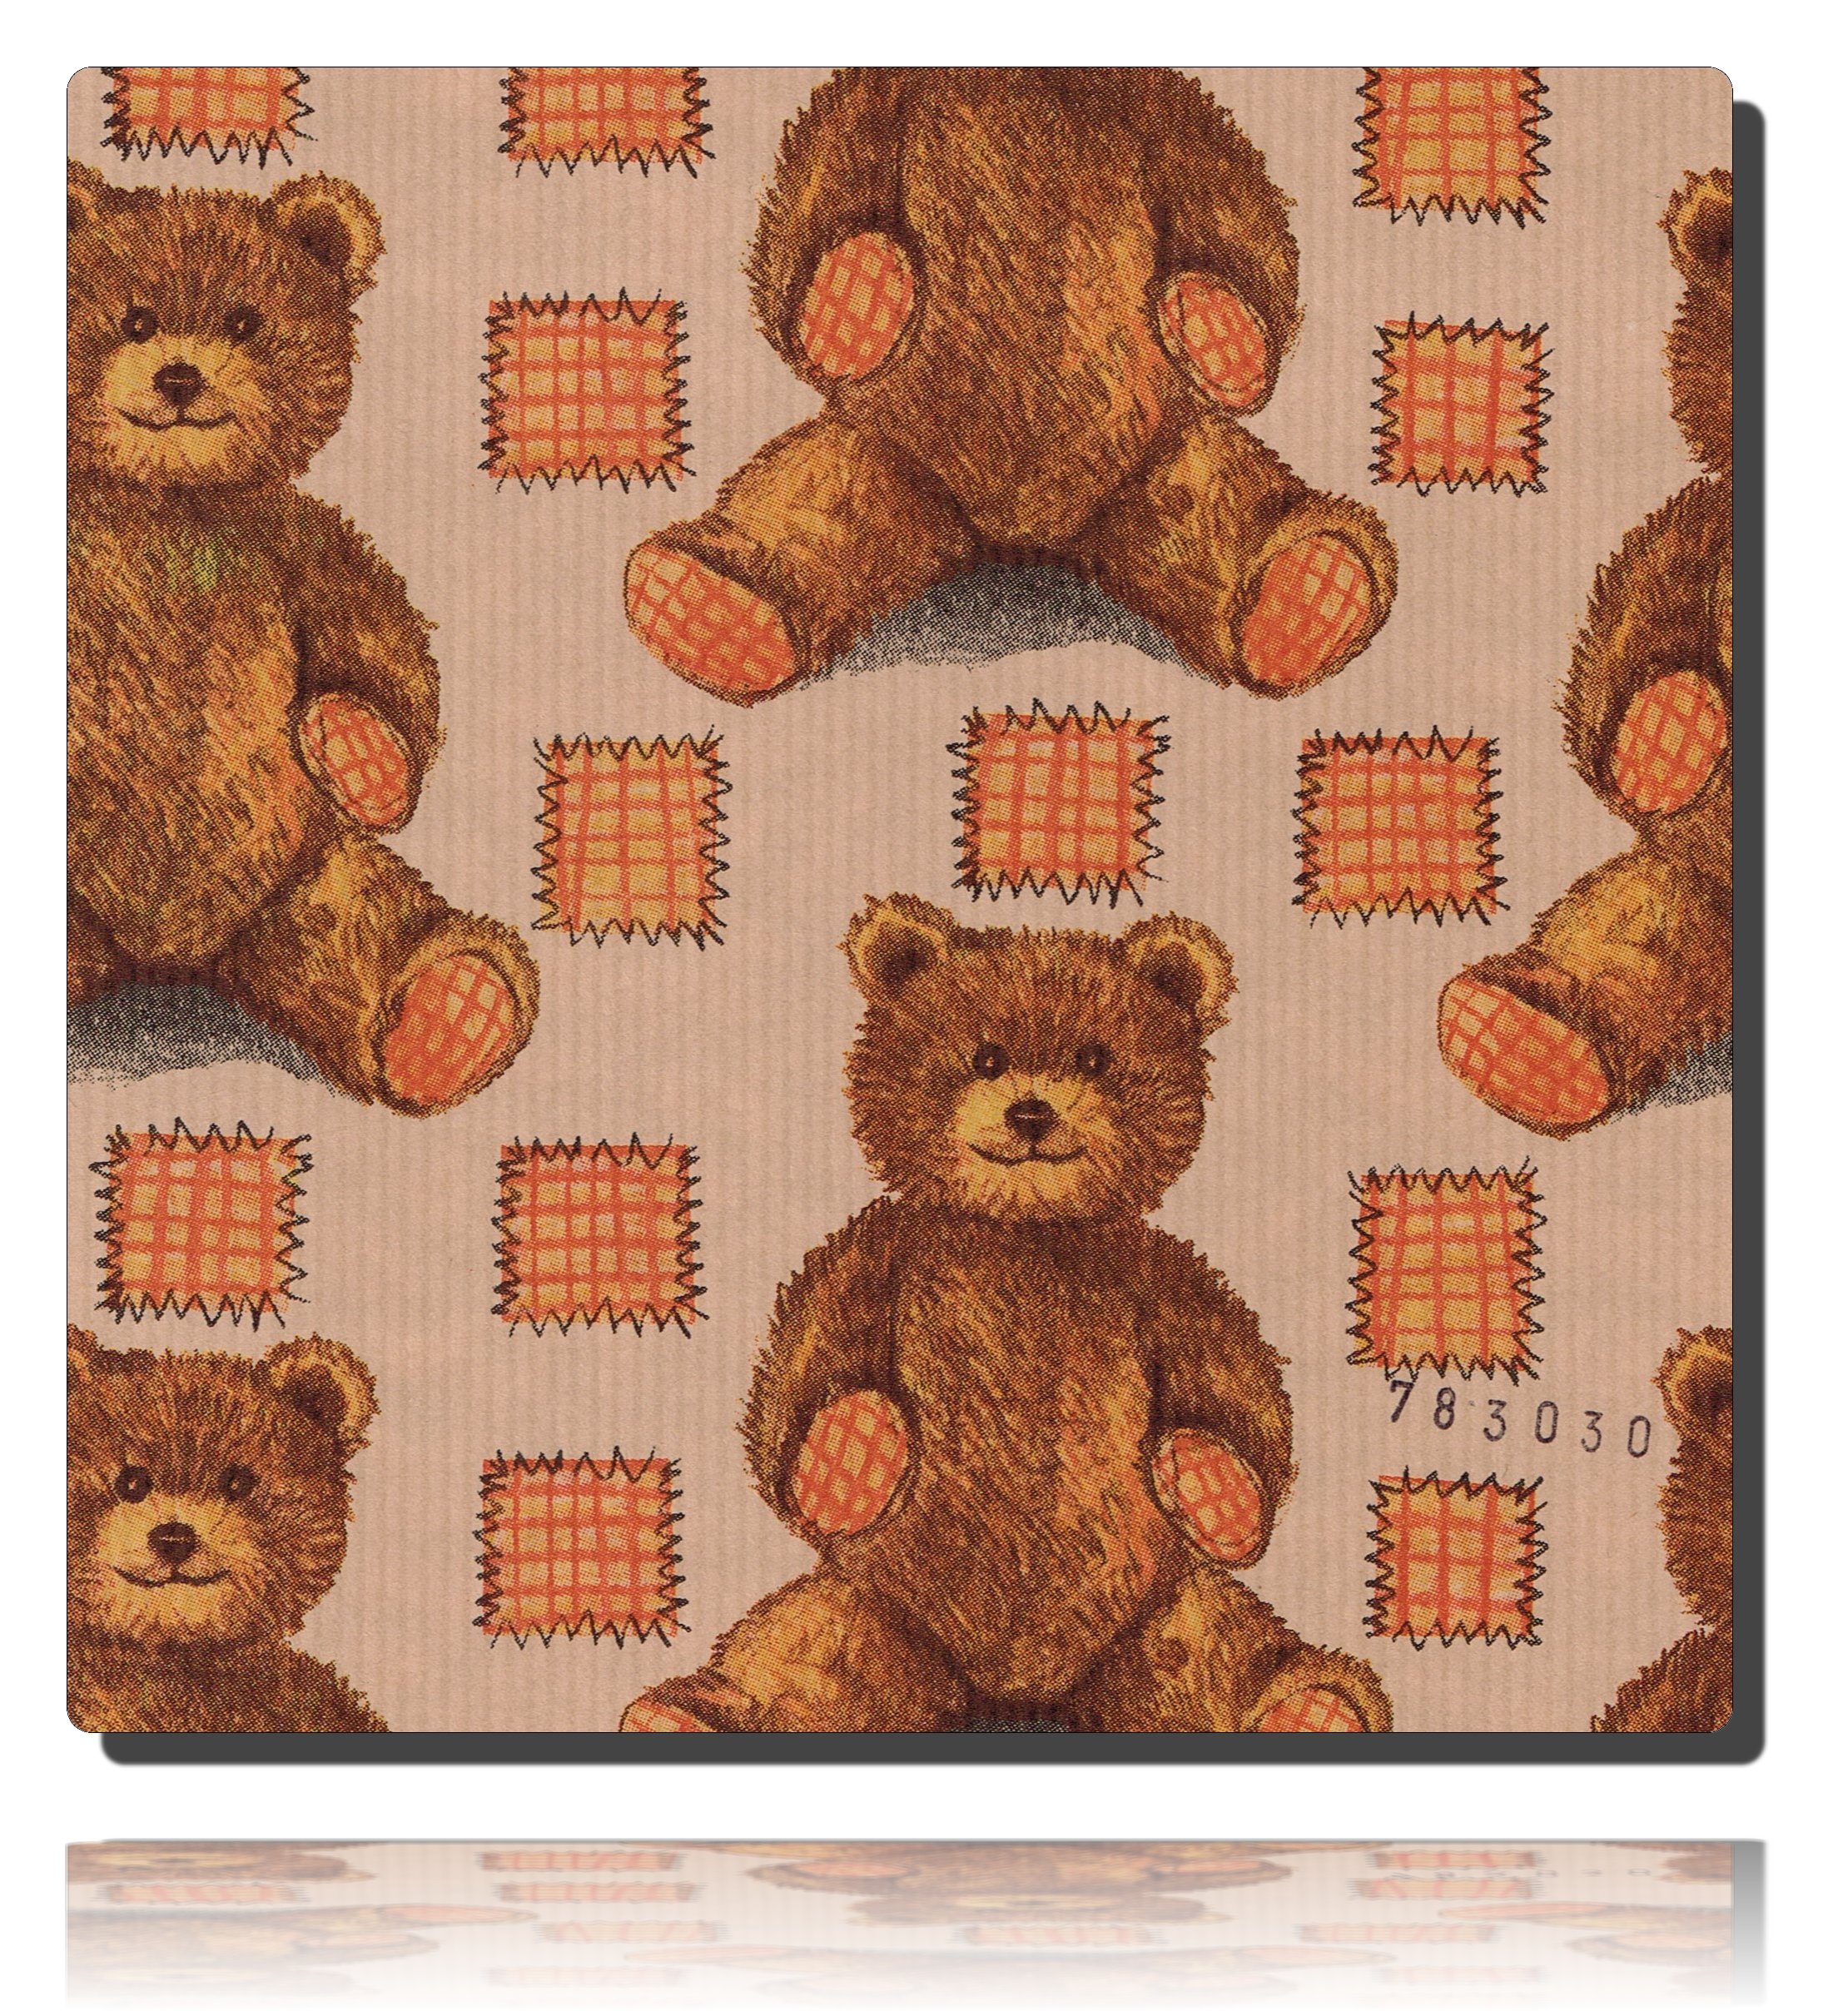 Geschenkpapier: Teddybär, natur - 783030